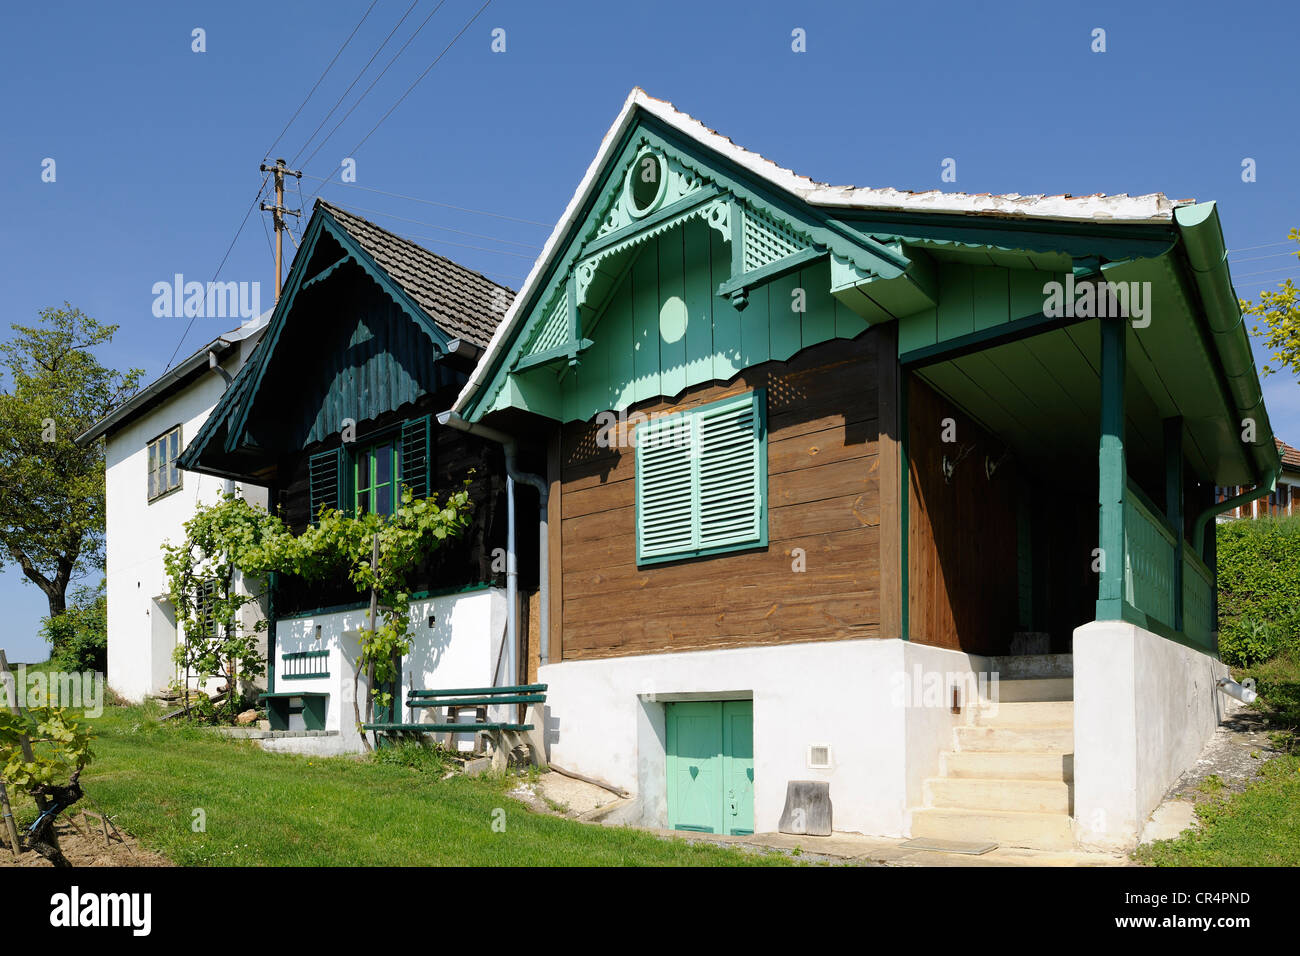 Weinhauer houses on Csaterberg, Kohfidisch, Burgenland, Austria, Europe Stock Photo